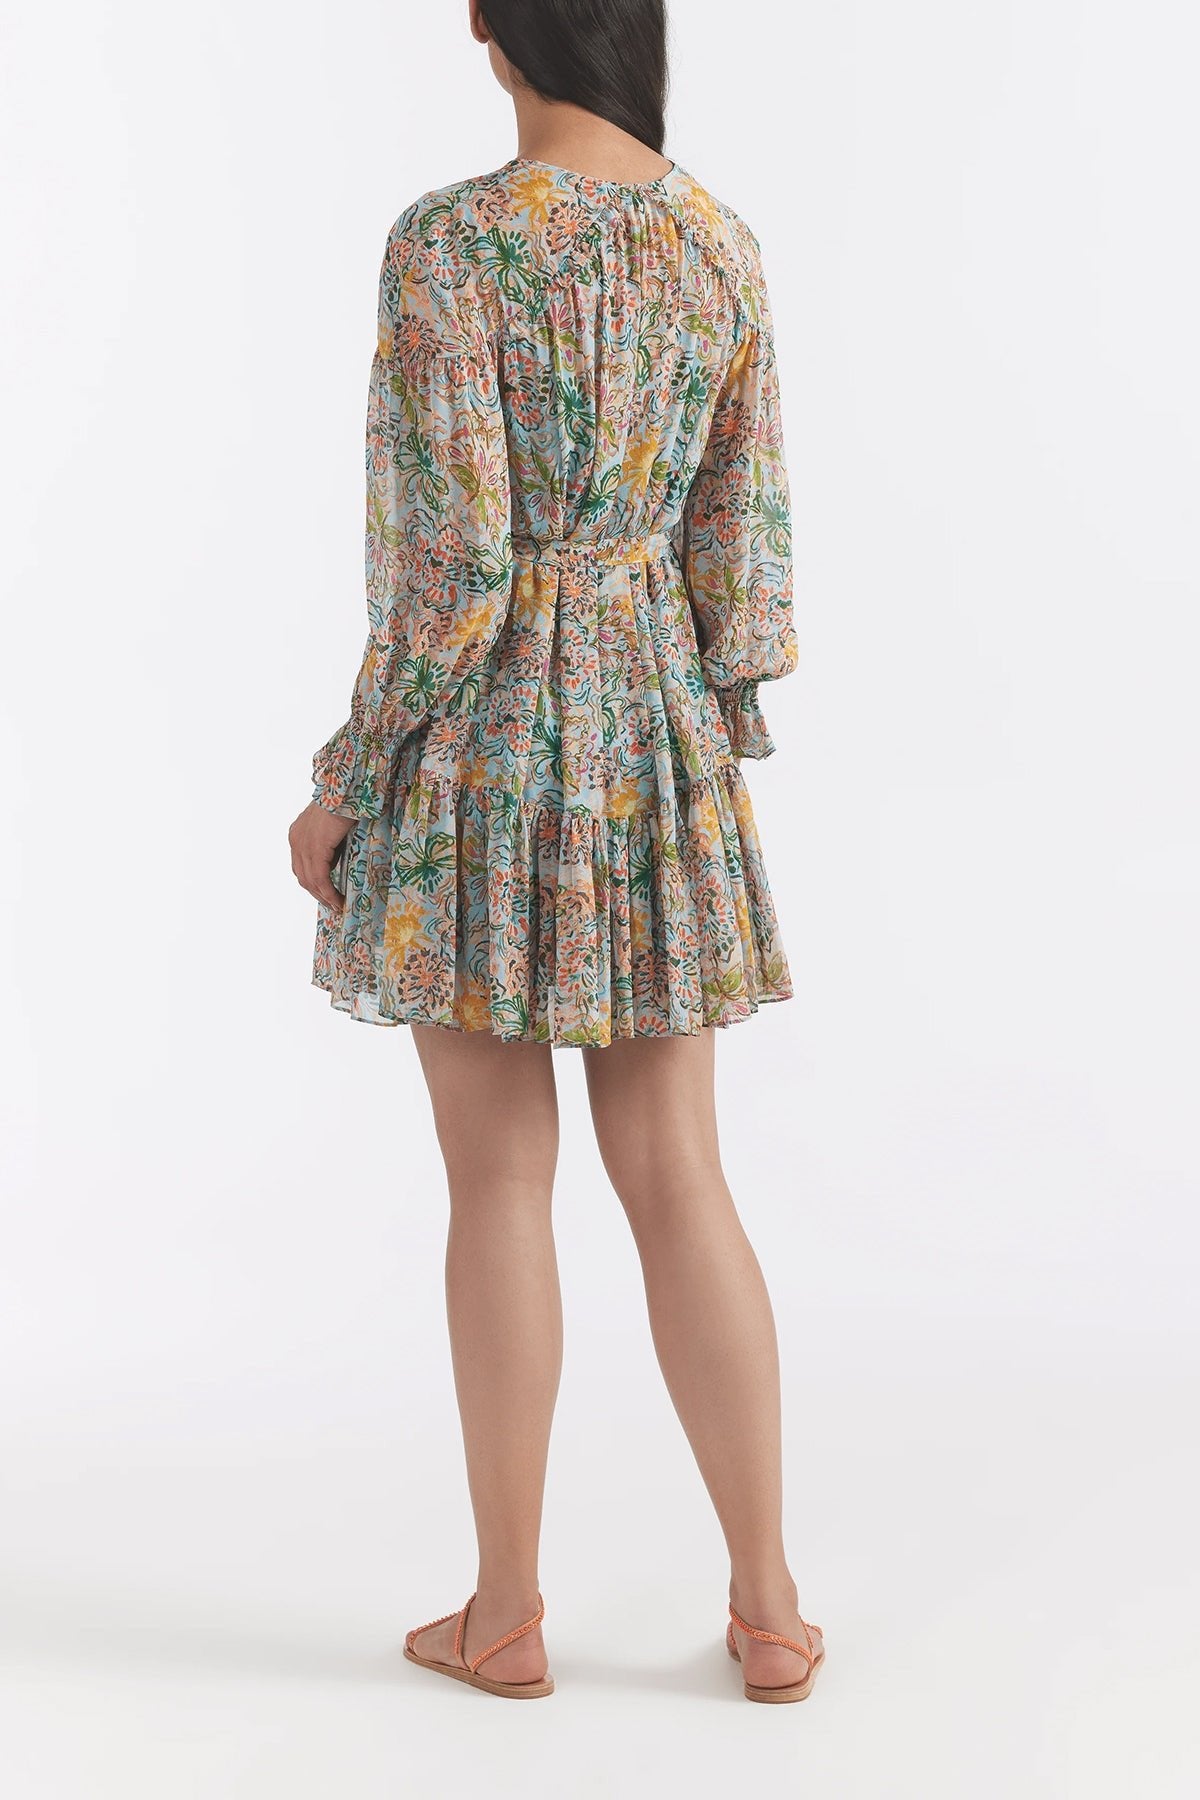 Pixie Dress In Orchard Sky - shop-olivia.com